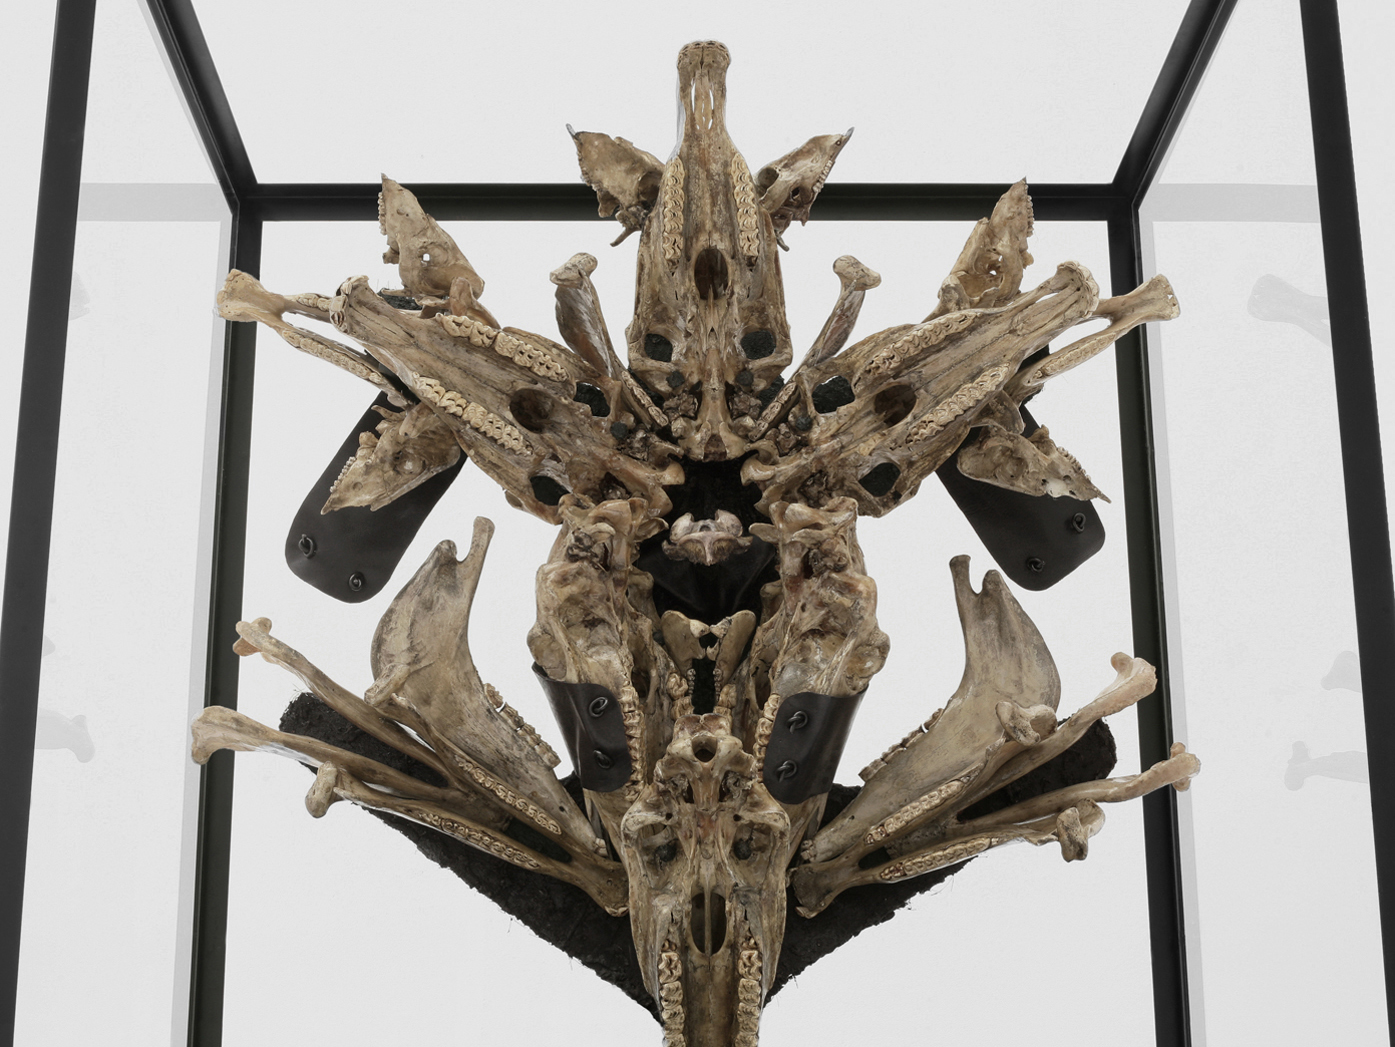 POSSESIA / Triumphant (detail) 2010 / 120 x 250 x 90 cm / horse skulls, pig skulls, wood, leather, steel, weights, fur, soil, 
resin, enamel